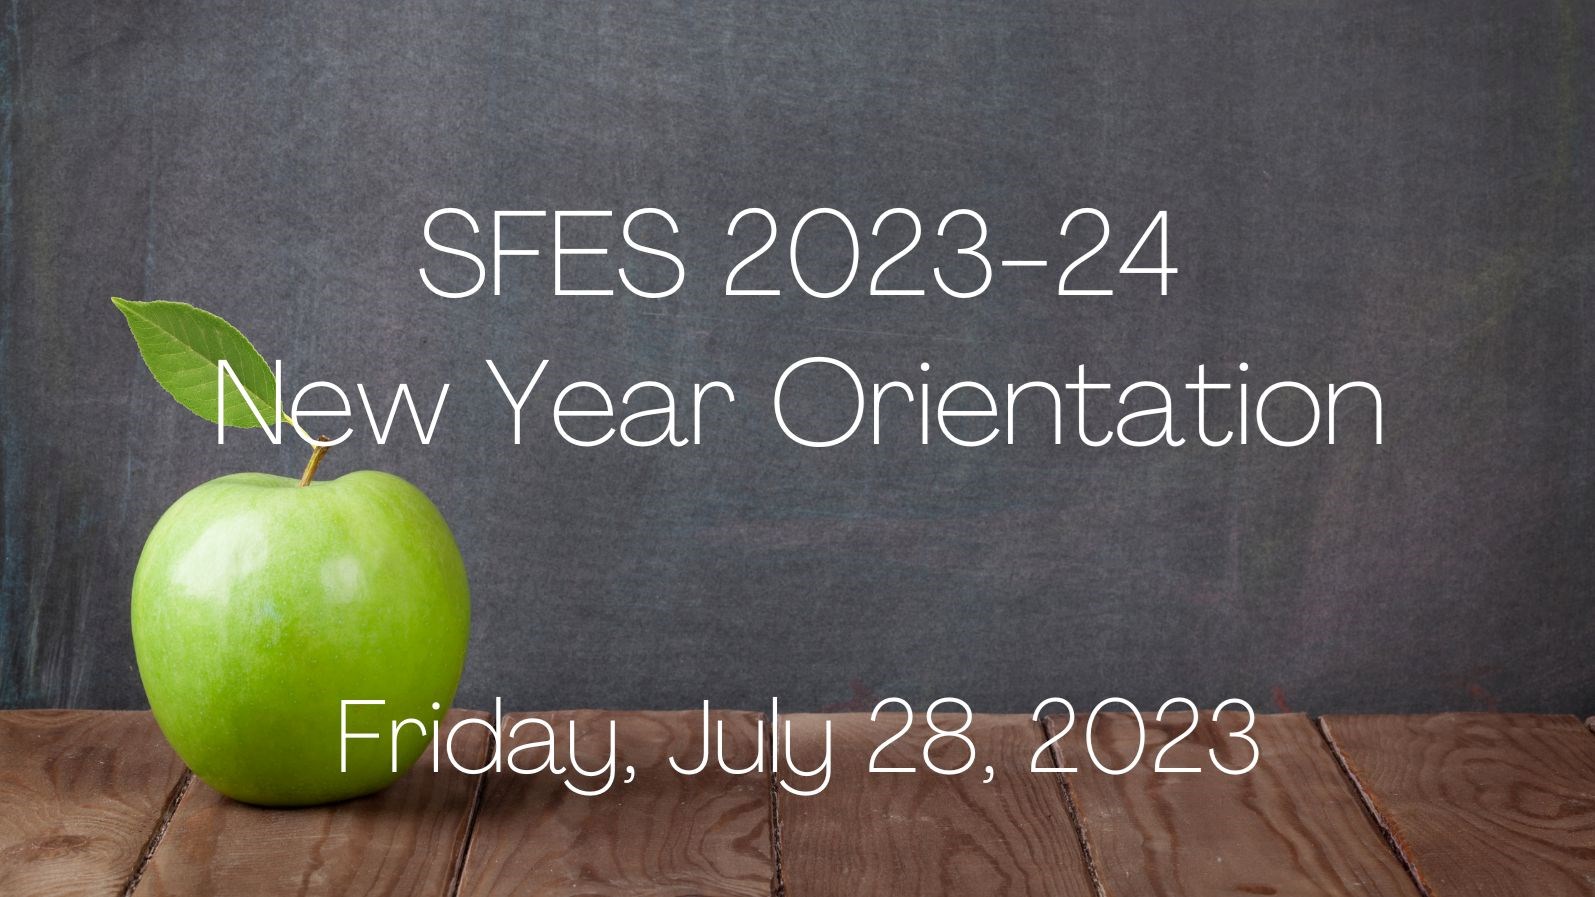 New Year Orientation: Friday, July 28, 2023